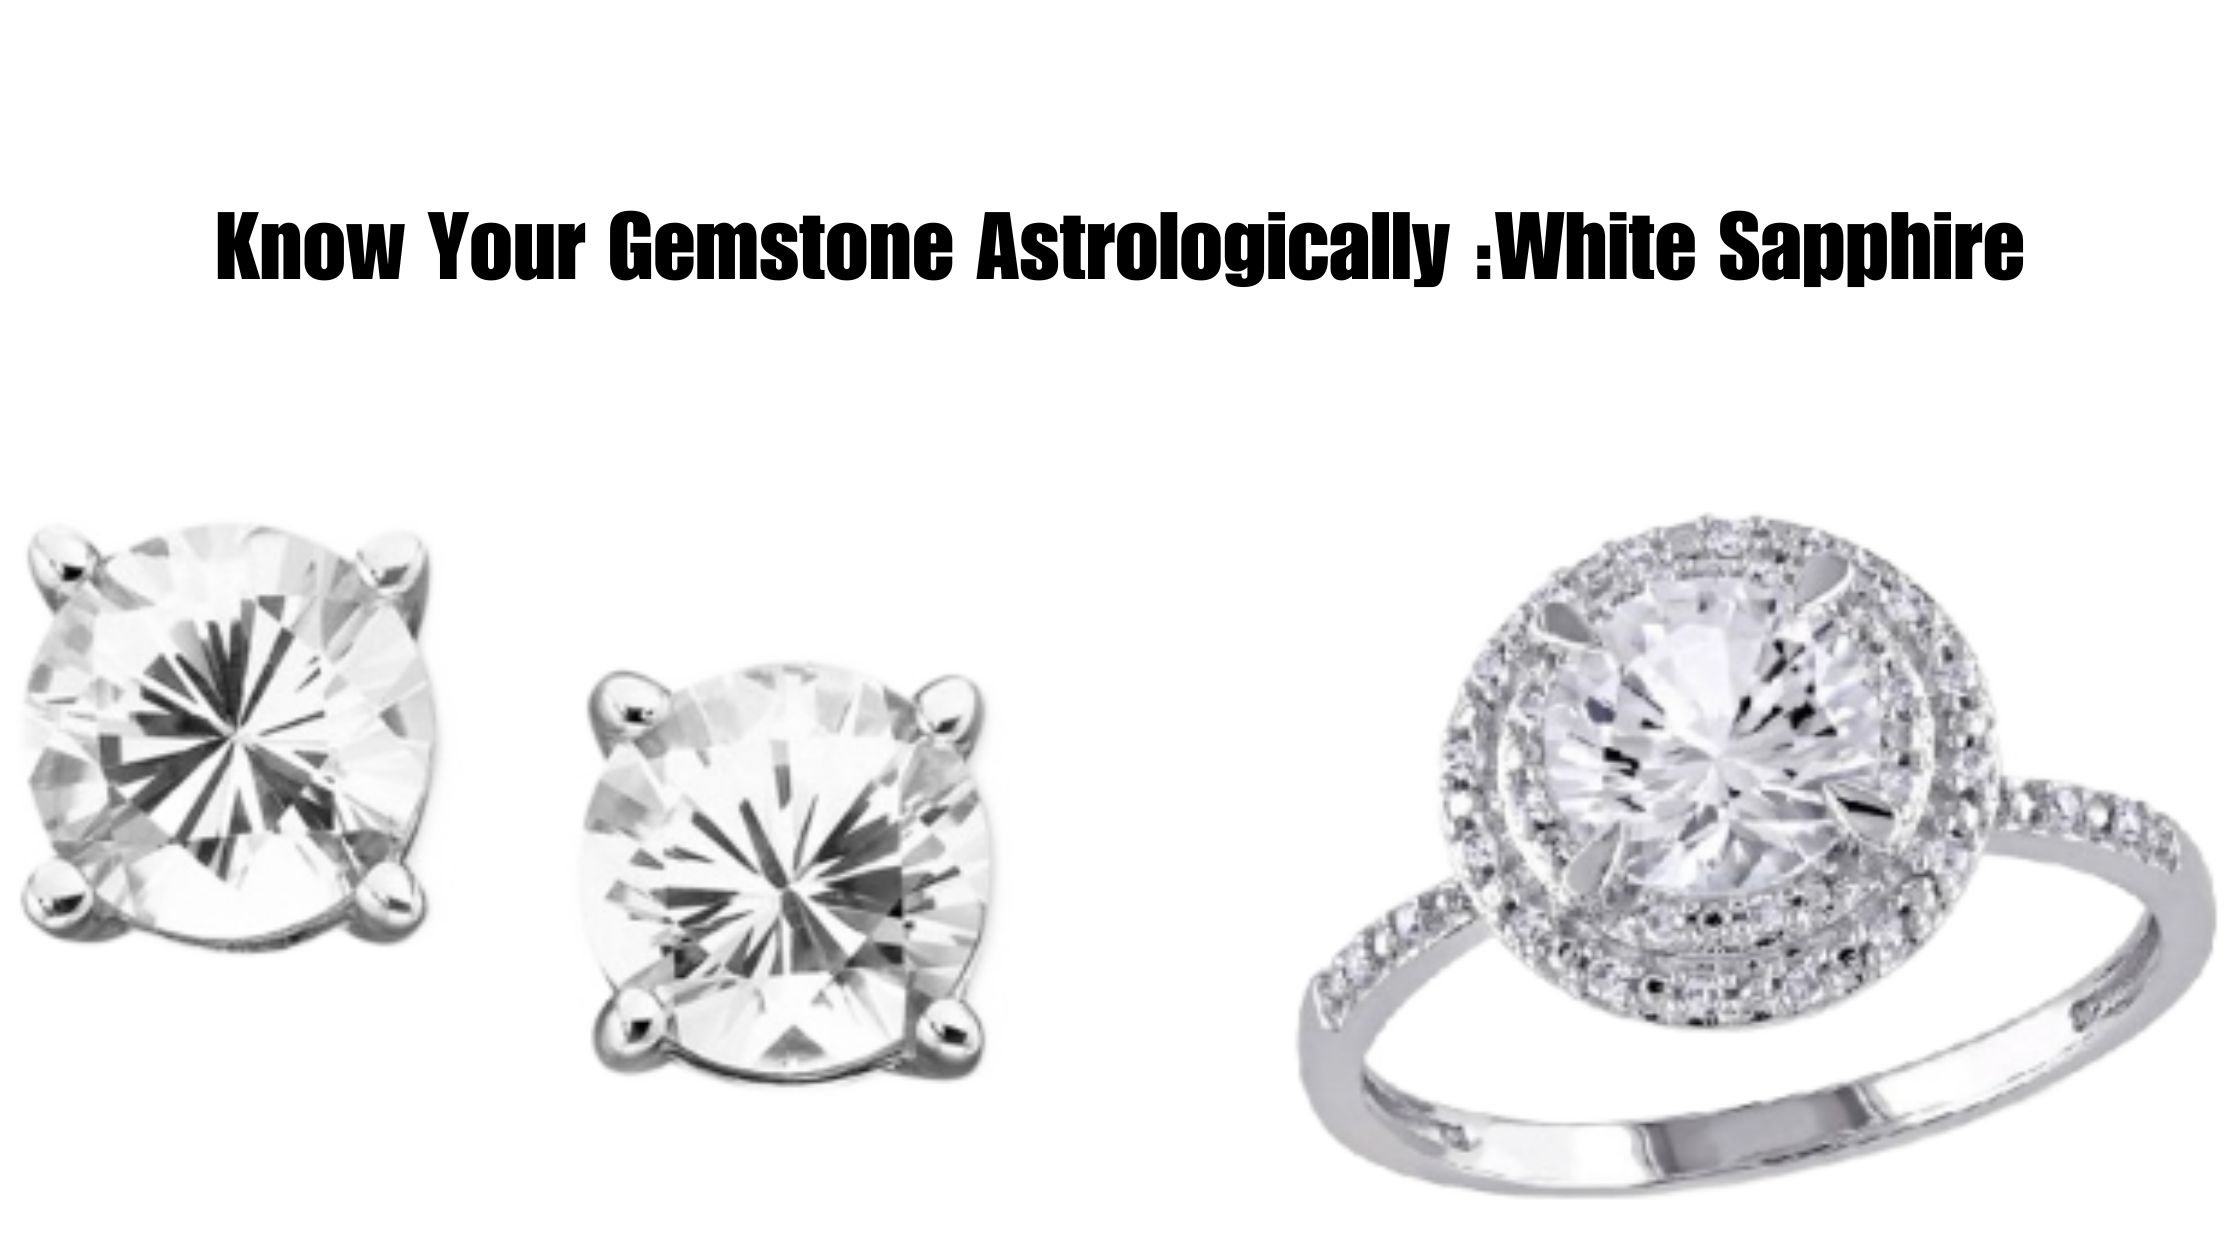 White Sapphire or White Sapphire Gemstone